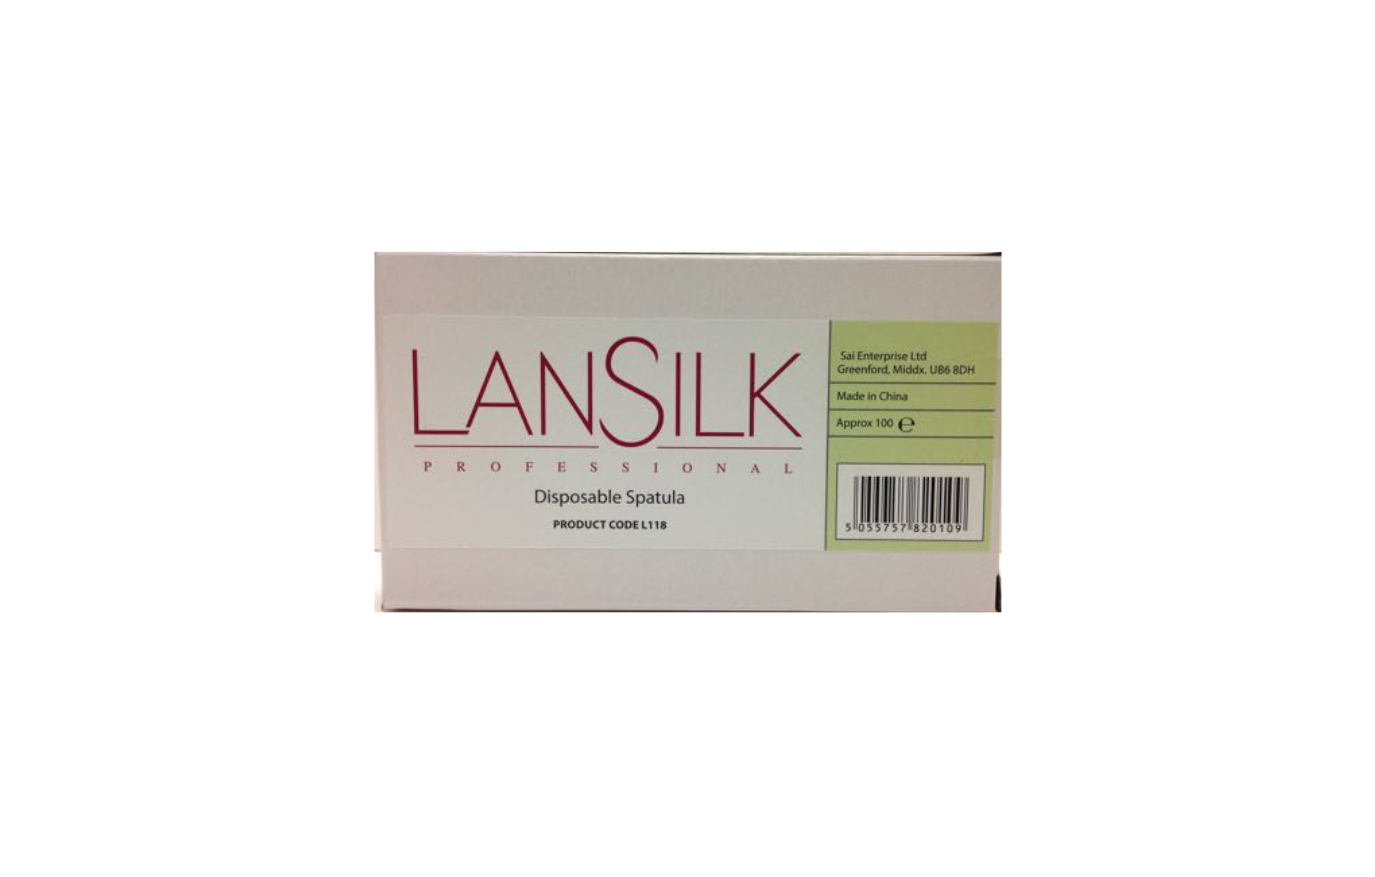 Lansilk Professional Quality Disposable Spatulas